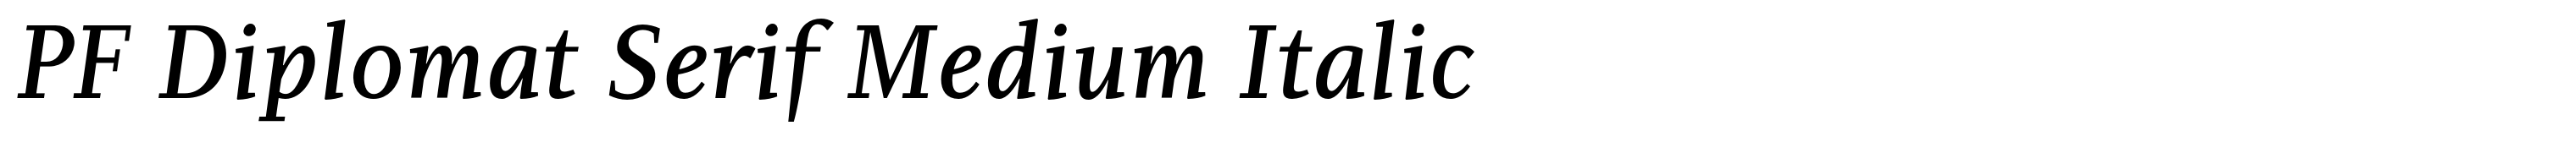 PF Diplomat Serif Medium Italic